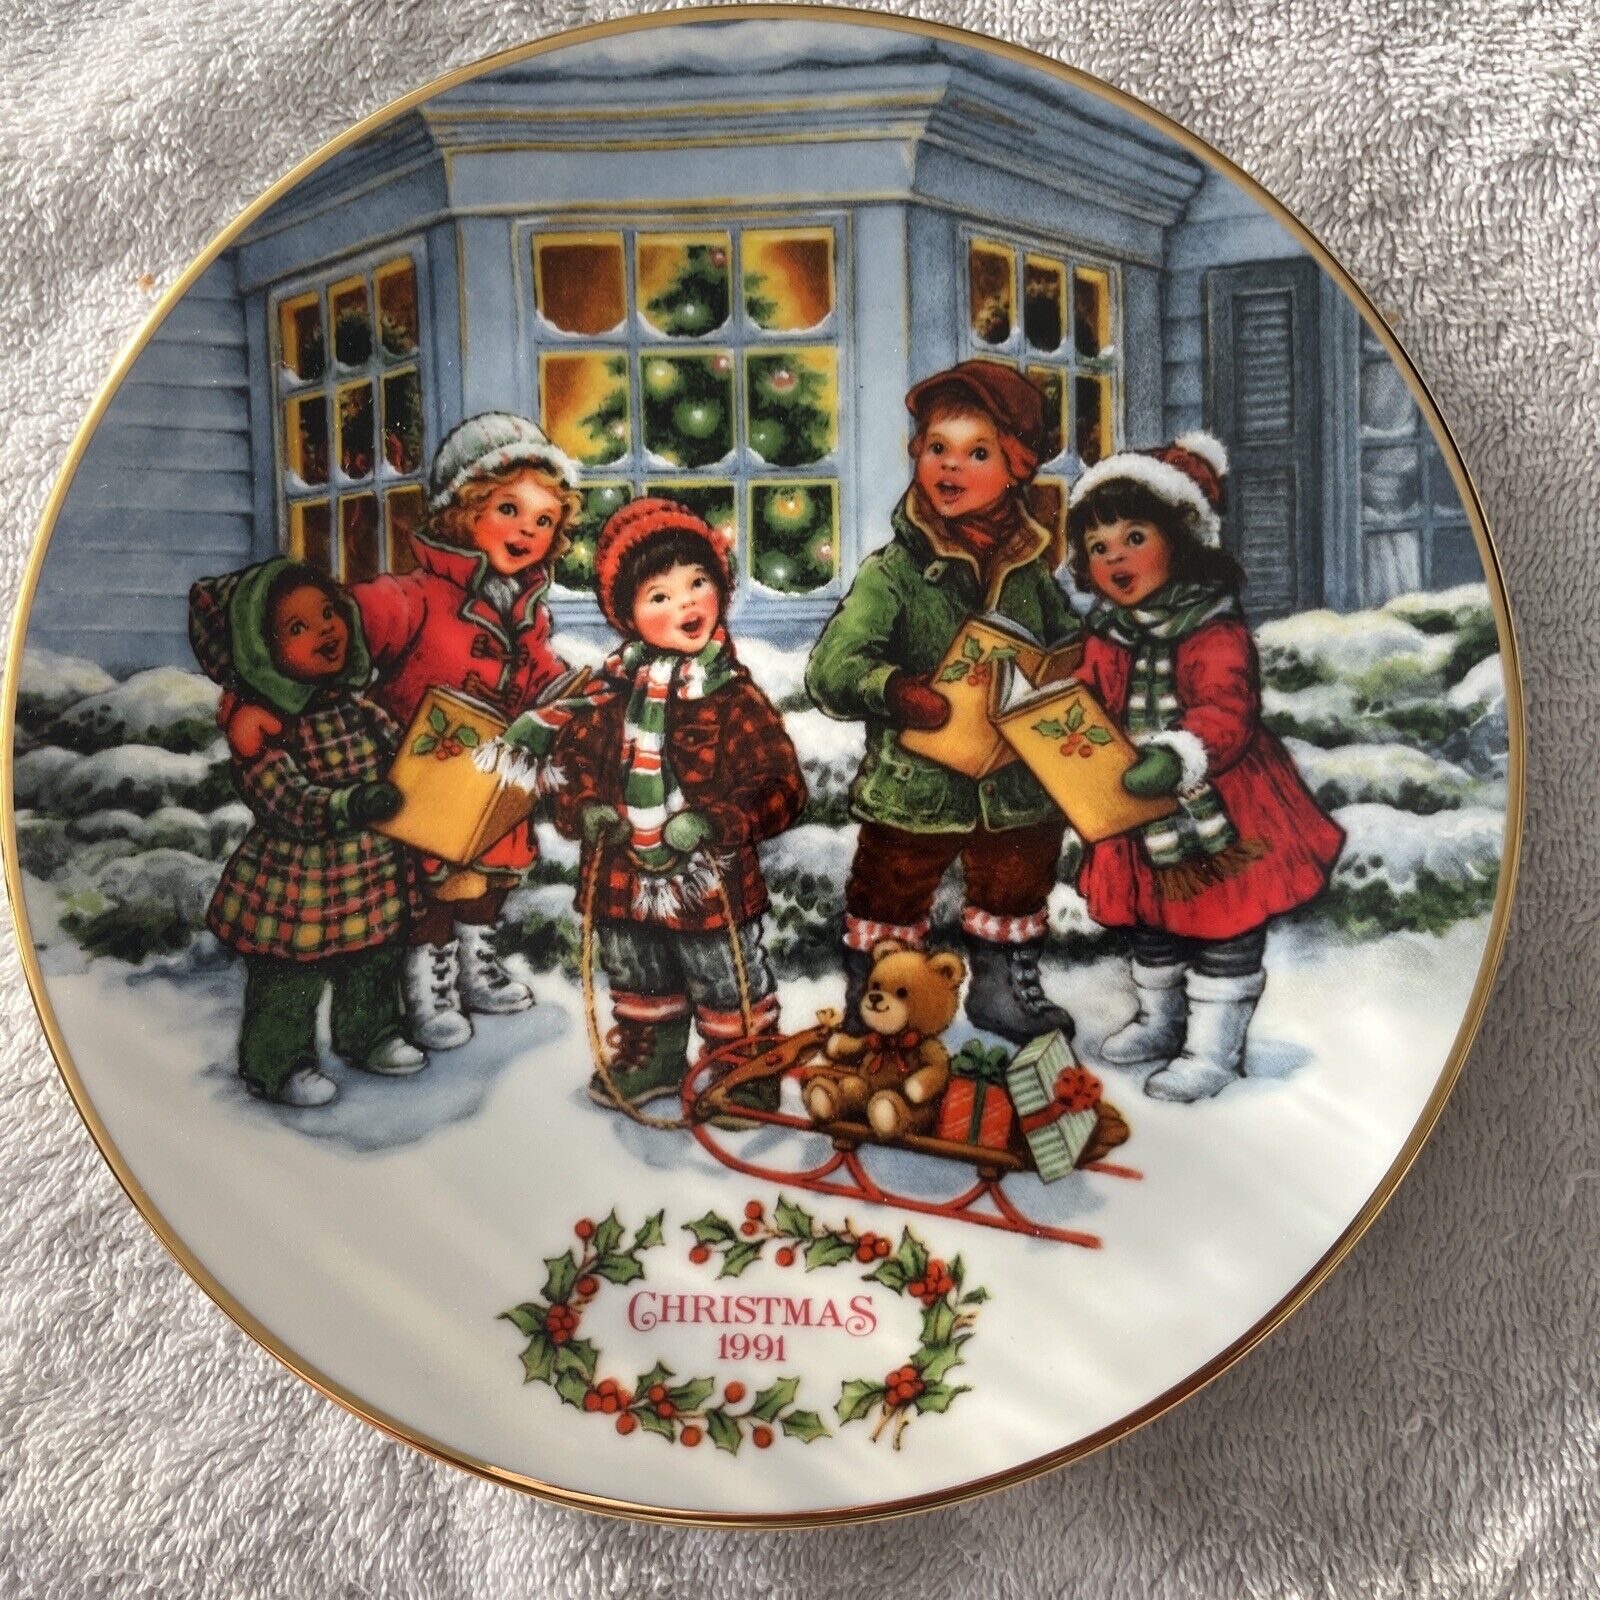 Avon 1991 Christmas Plate - Santa's Loving Touch - 22K GoldTrim